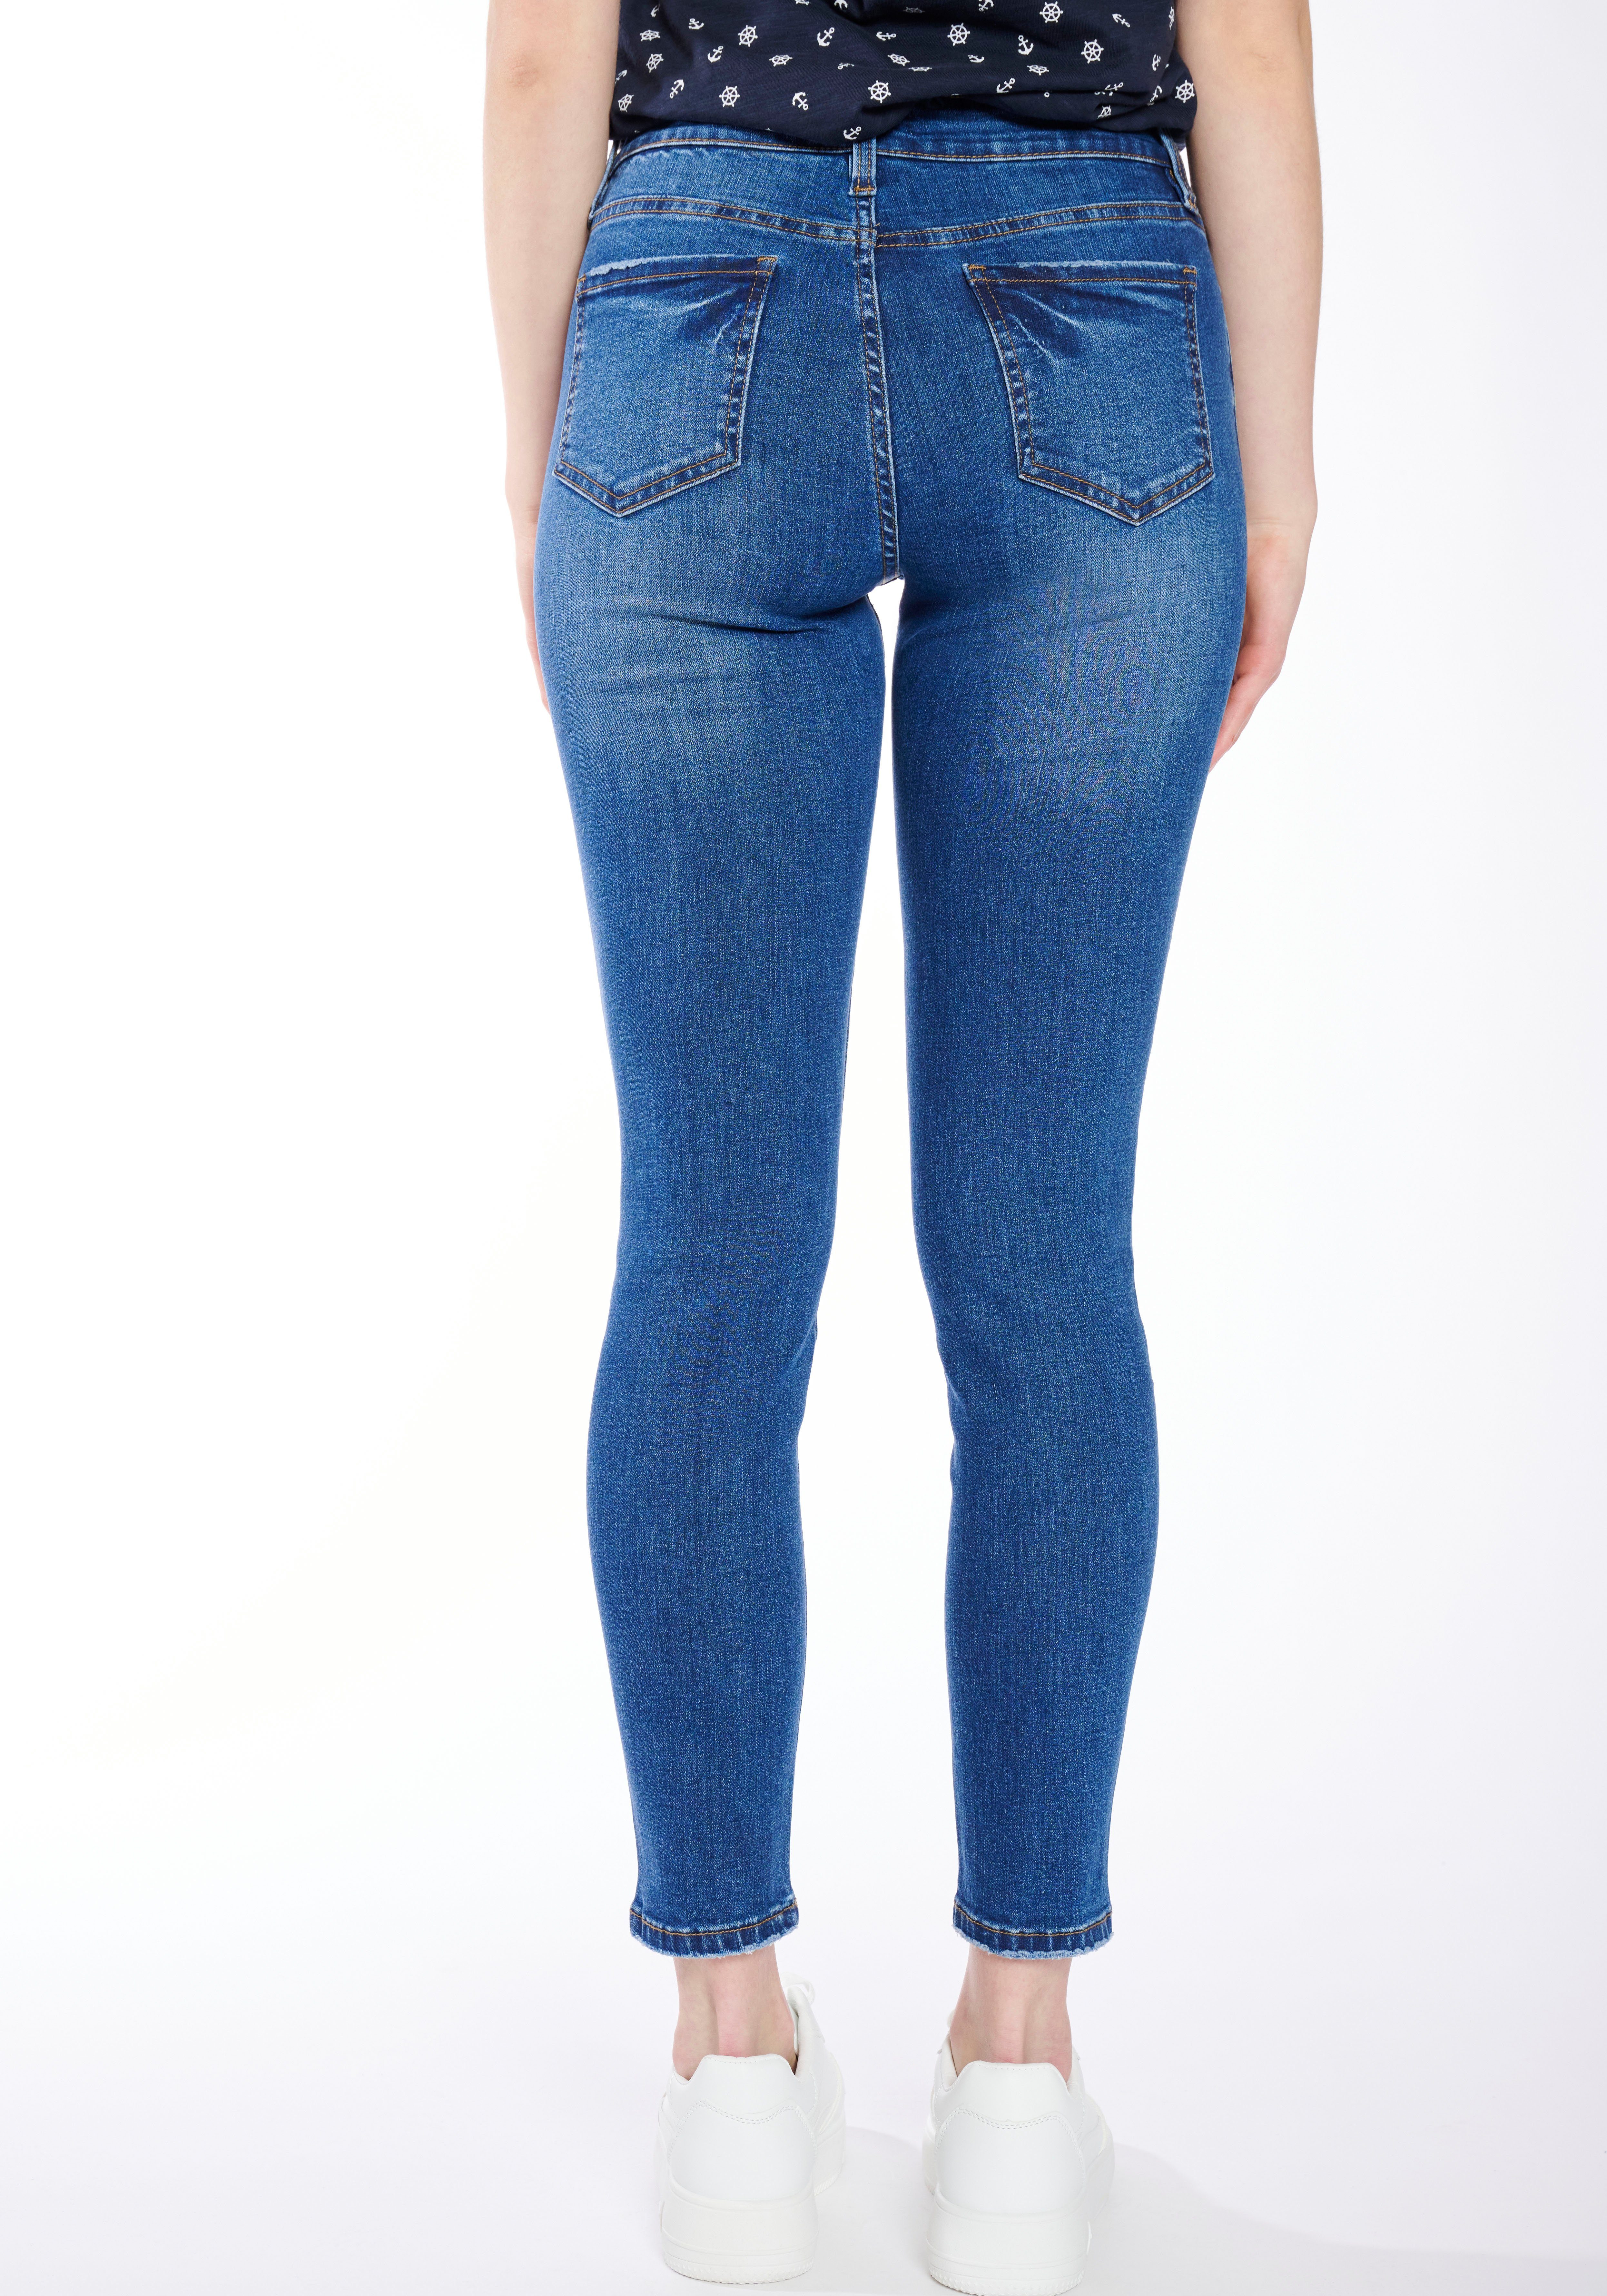 HaILYS 5-pocket jeans